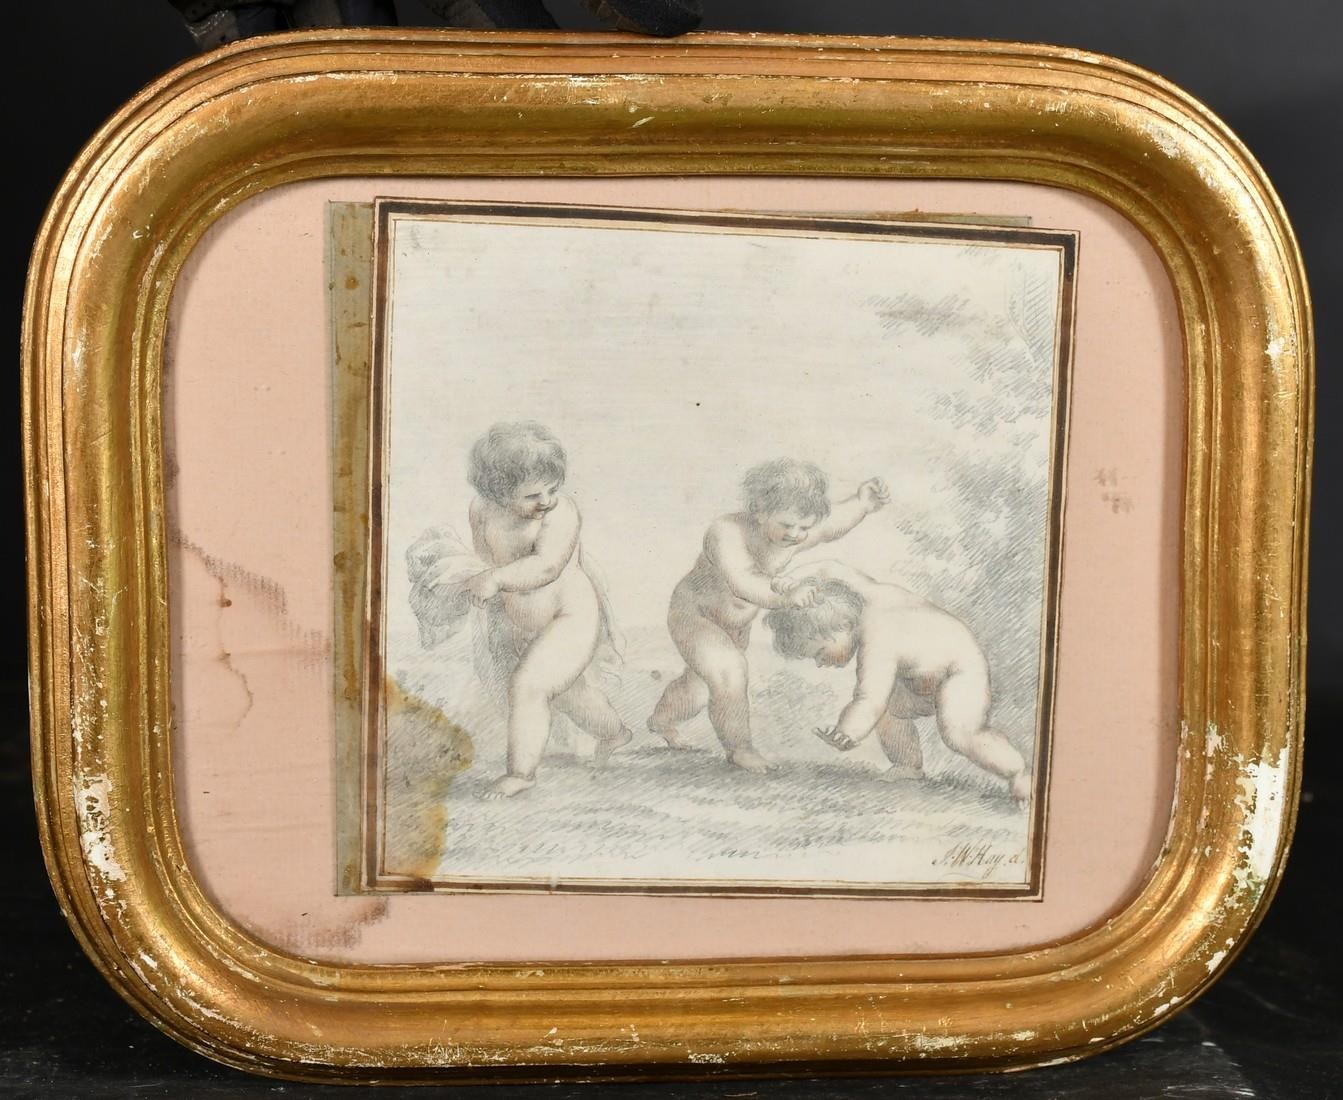 J. W. Hay, 19th Century, three cherubs playing, pencil and crayon, 6.25" x 6.25" (16 x 16cm). - Image 2 of 4